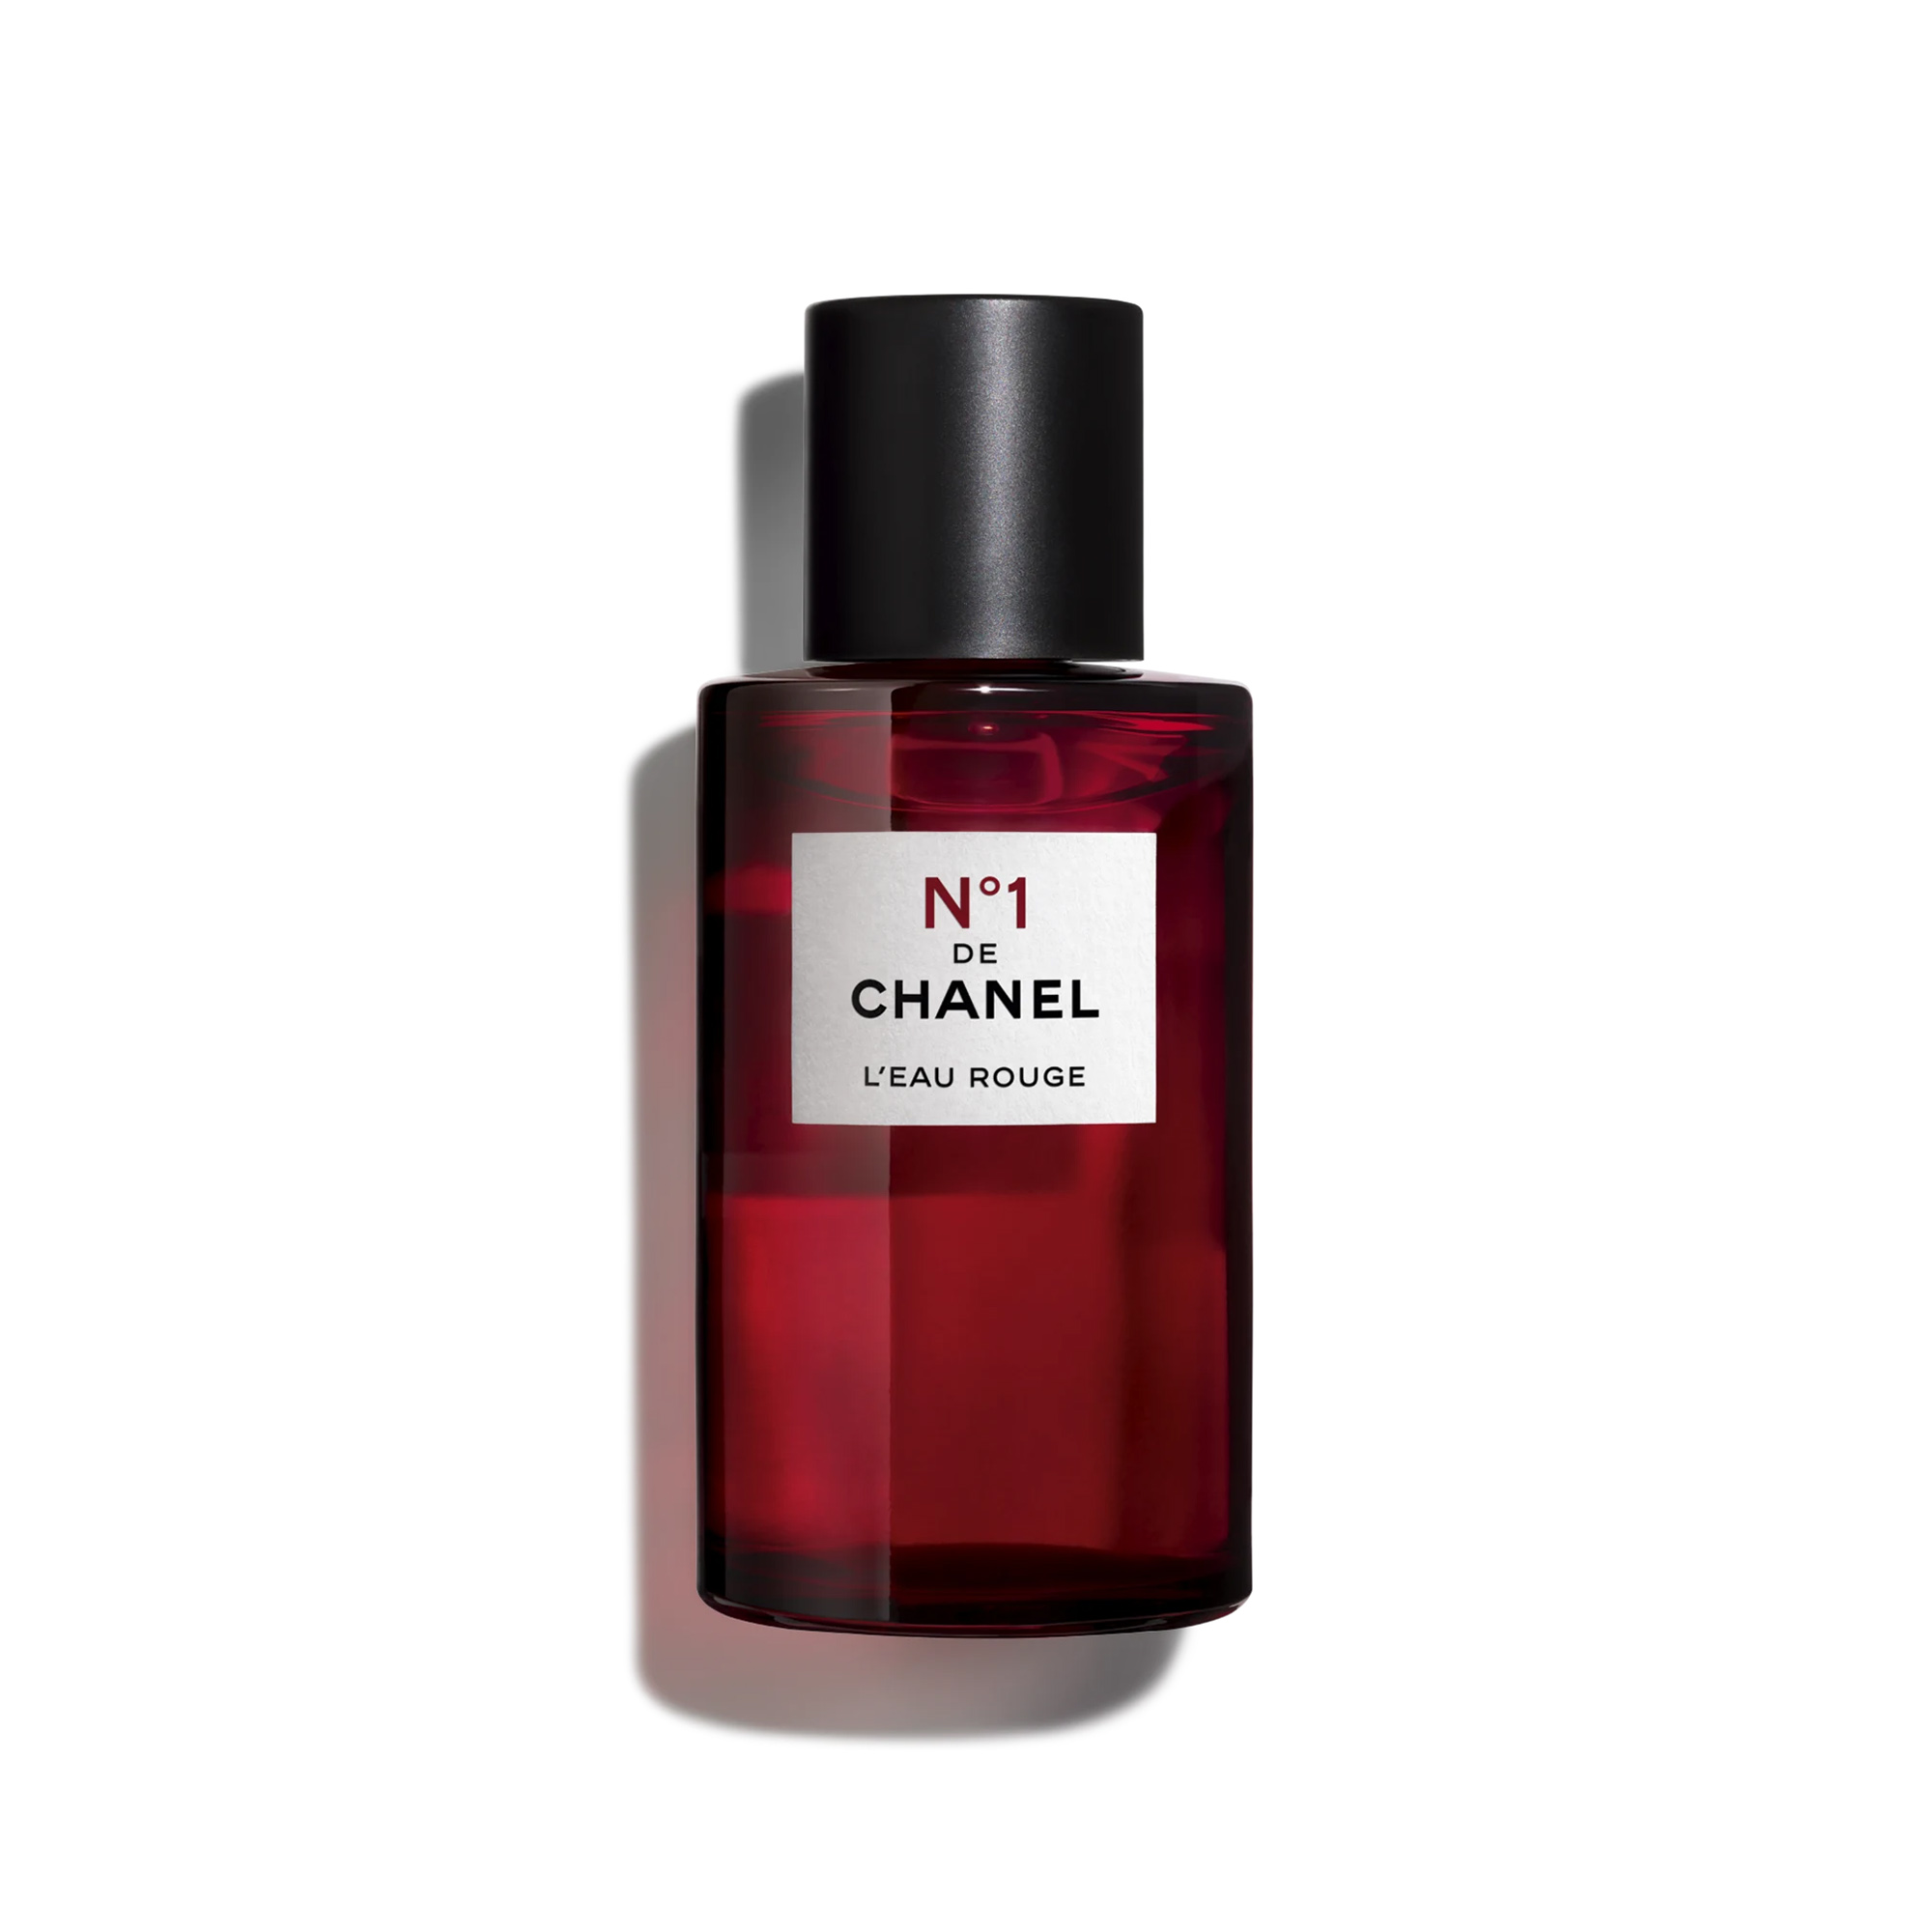 perfumes coco chanel